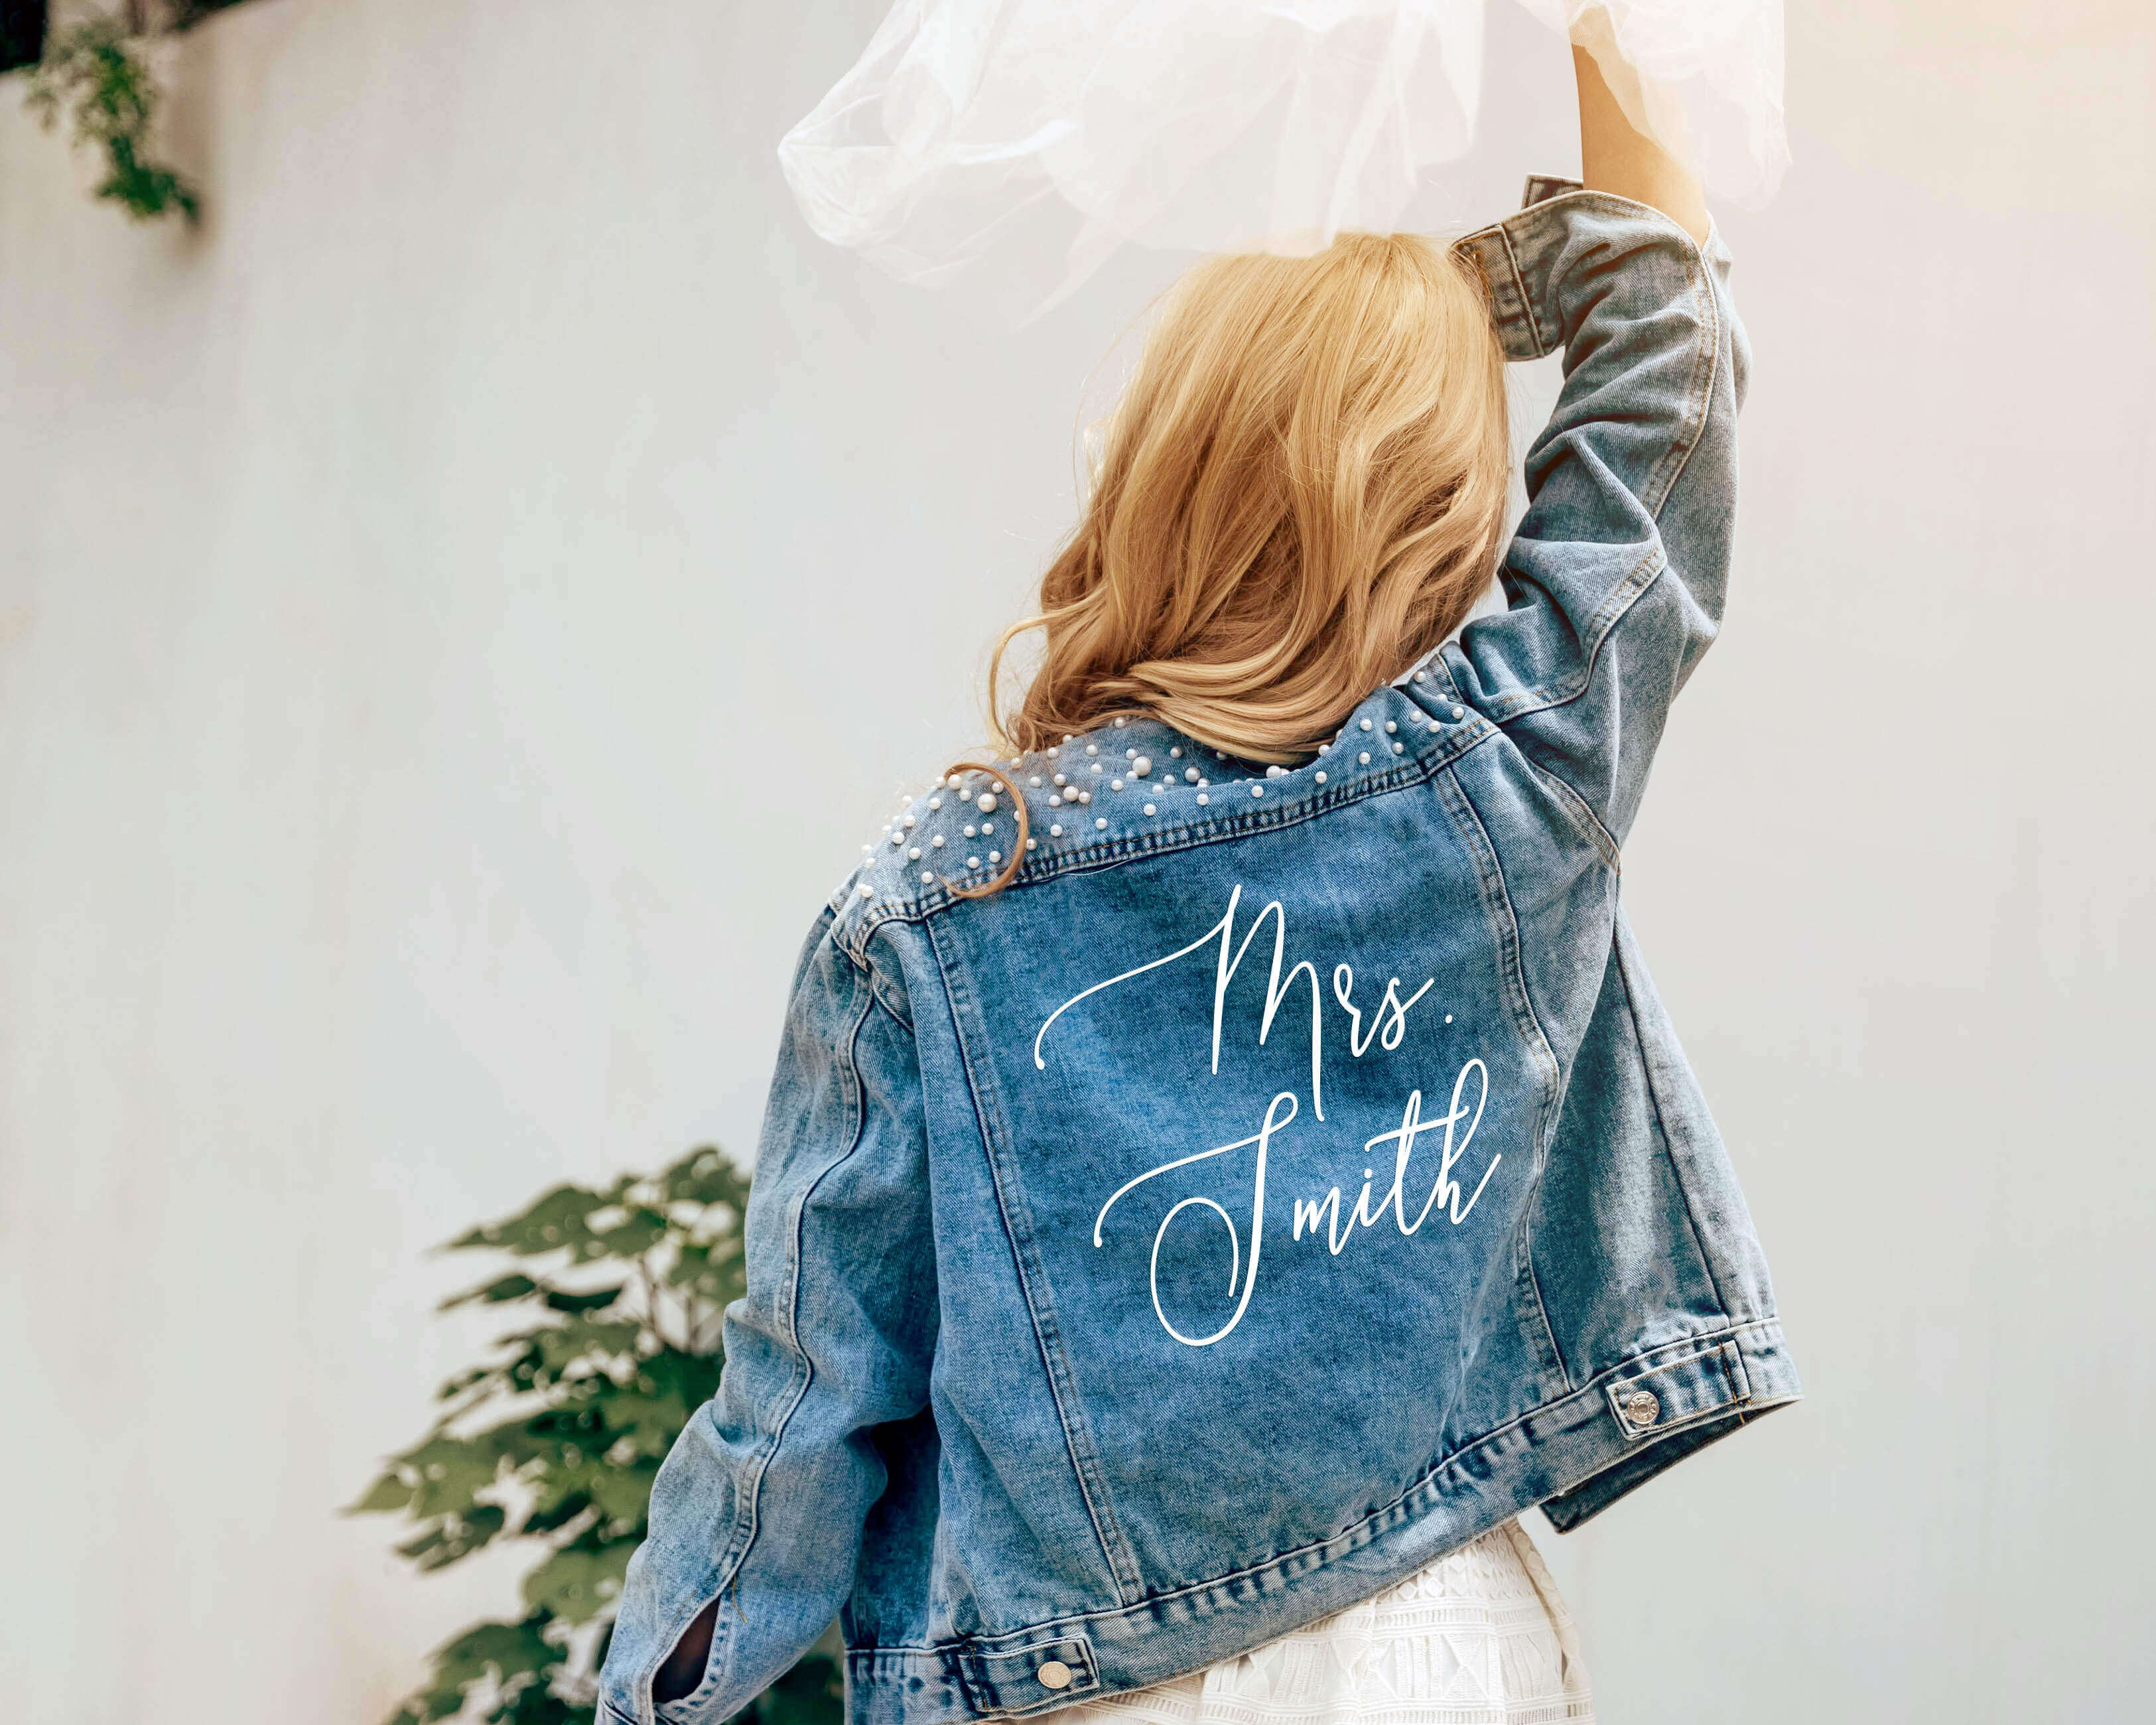 A beautiful bride wear a custom bride jean jacket with custom text on her wedding day.